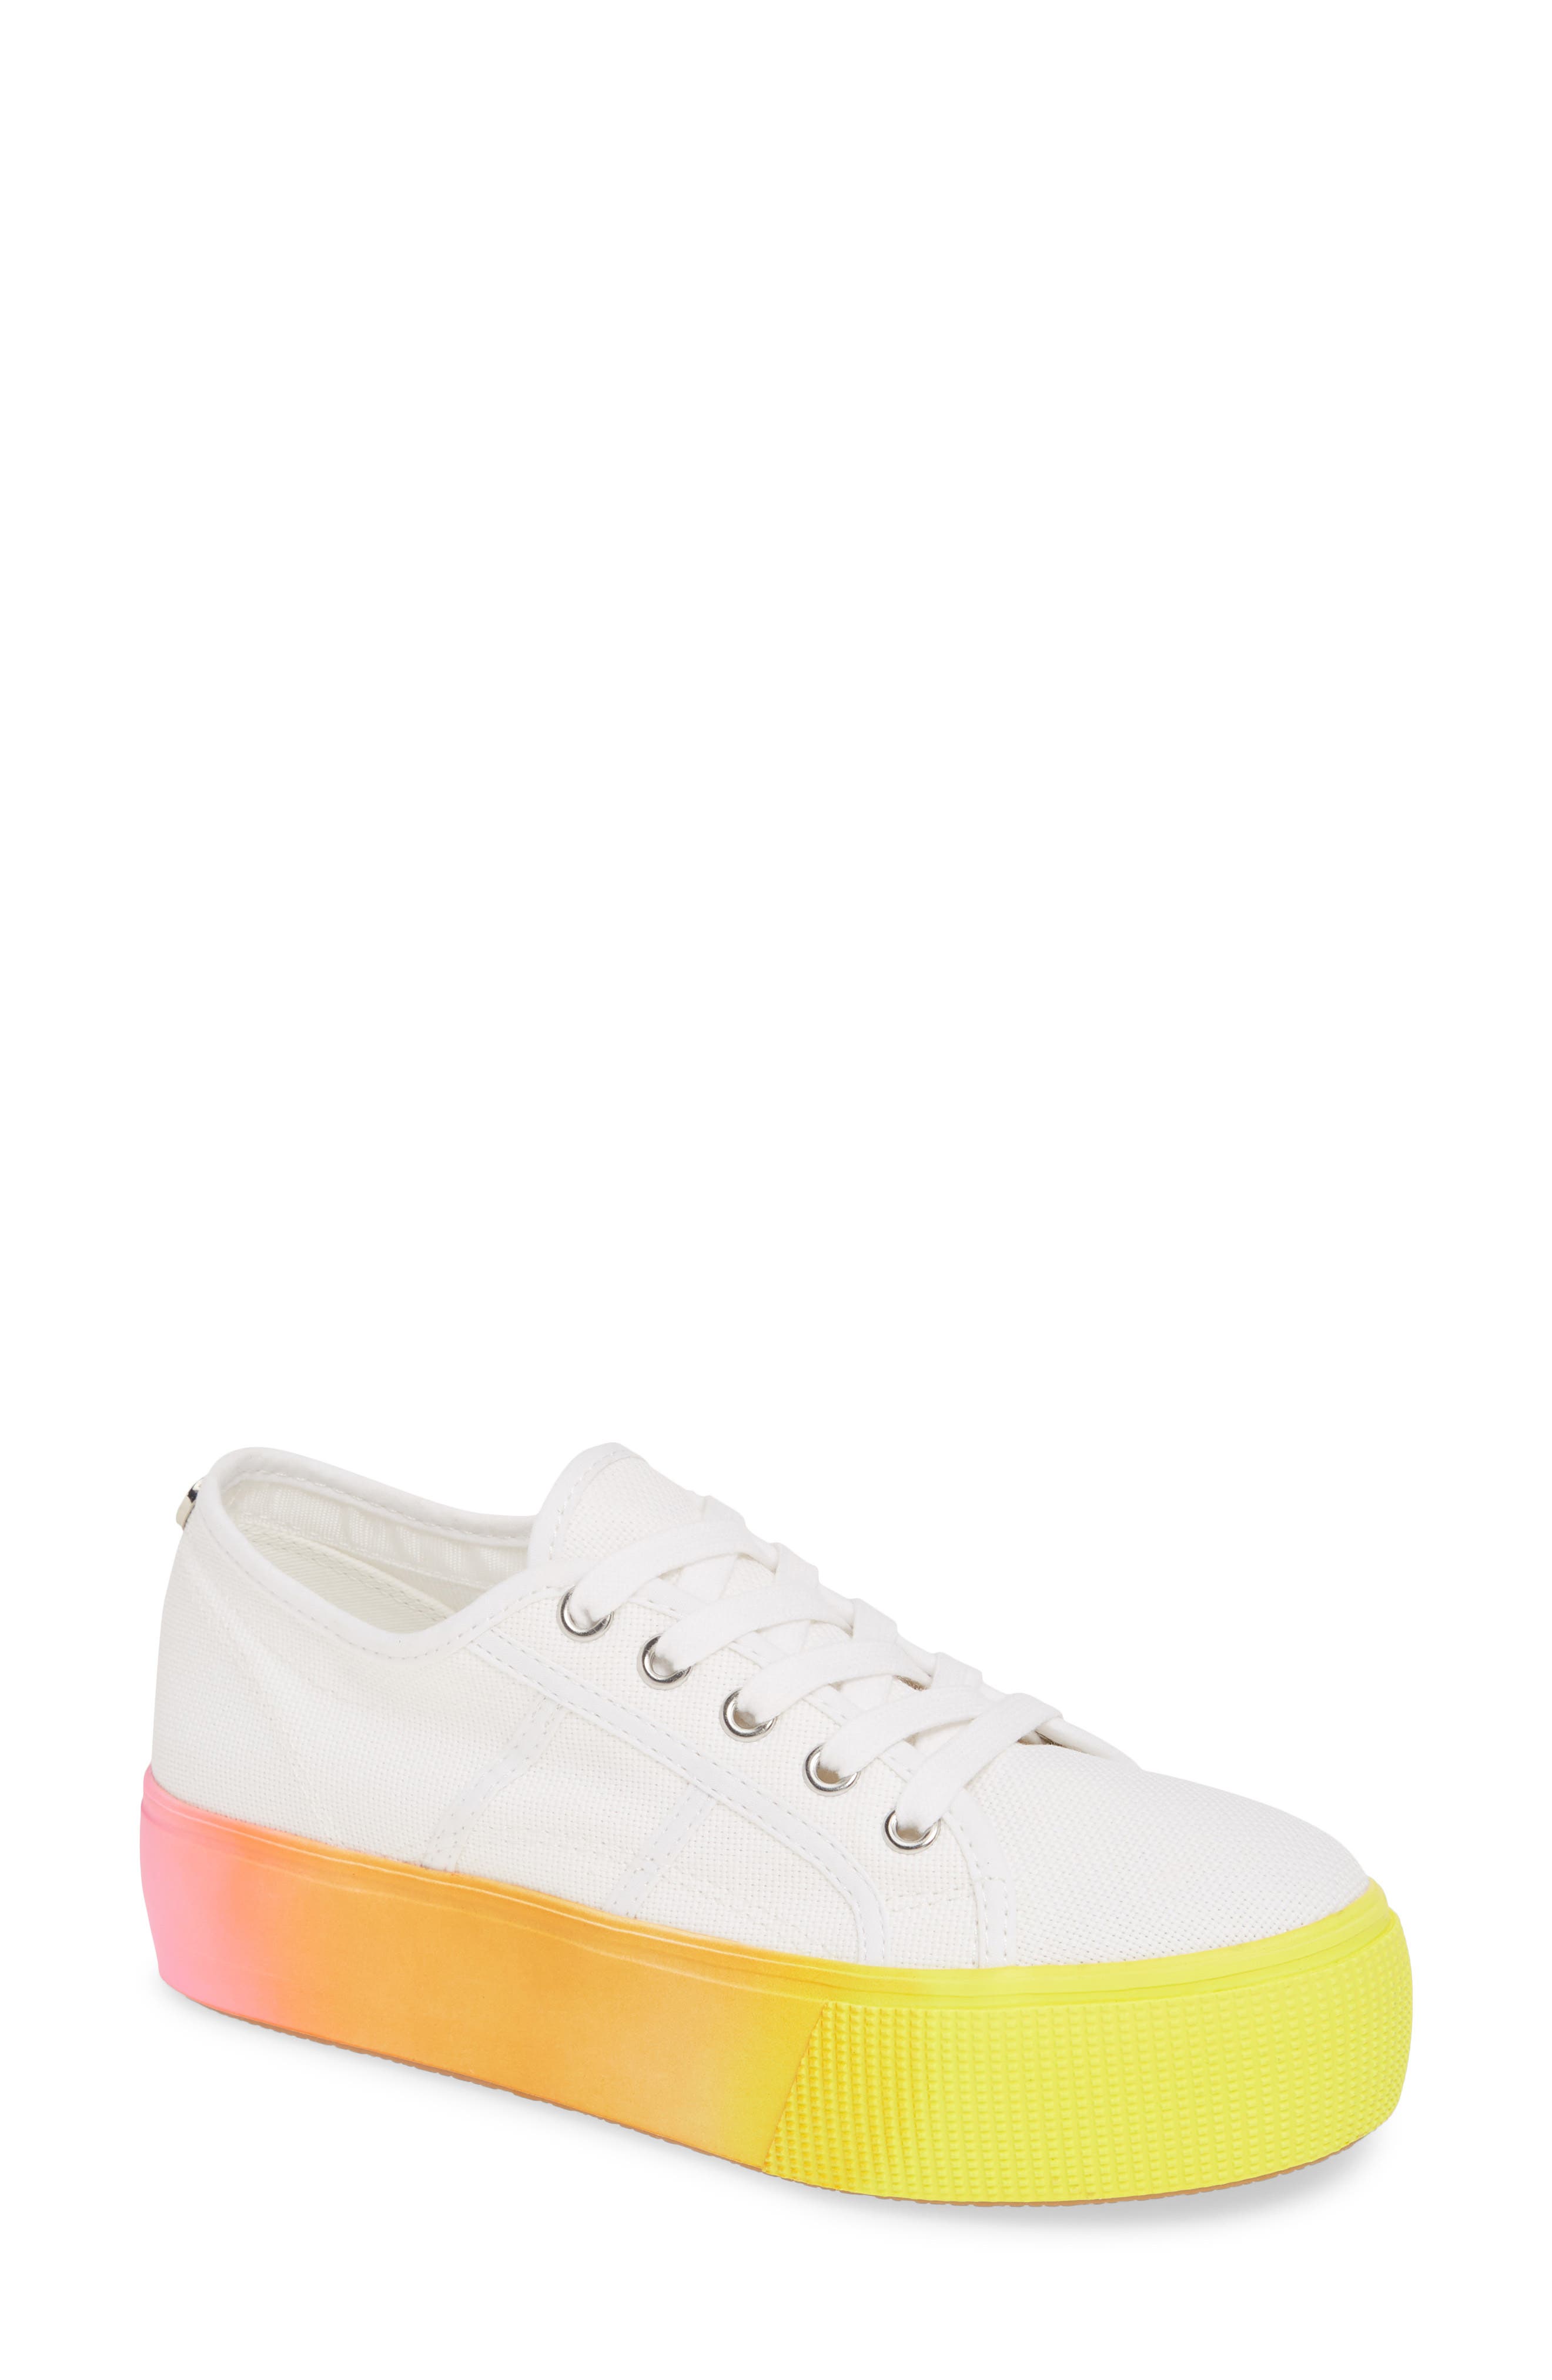 steve madden rainbow platform sneakers